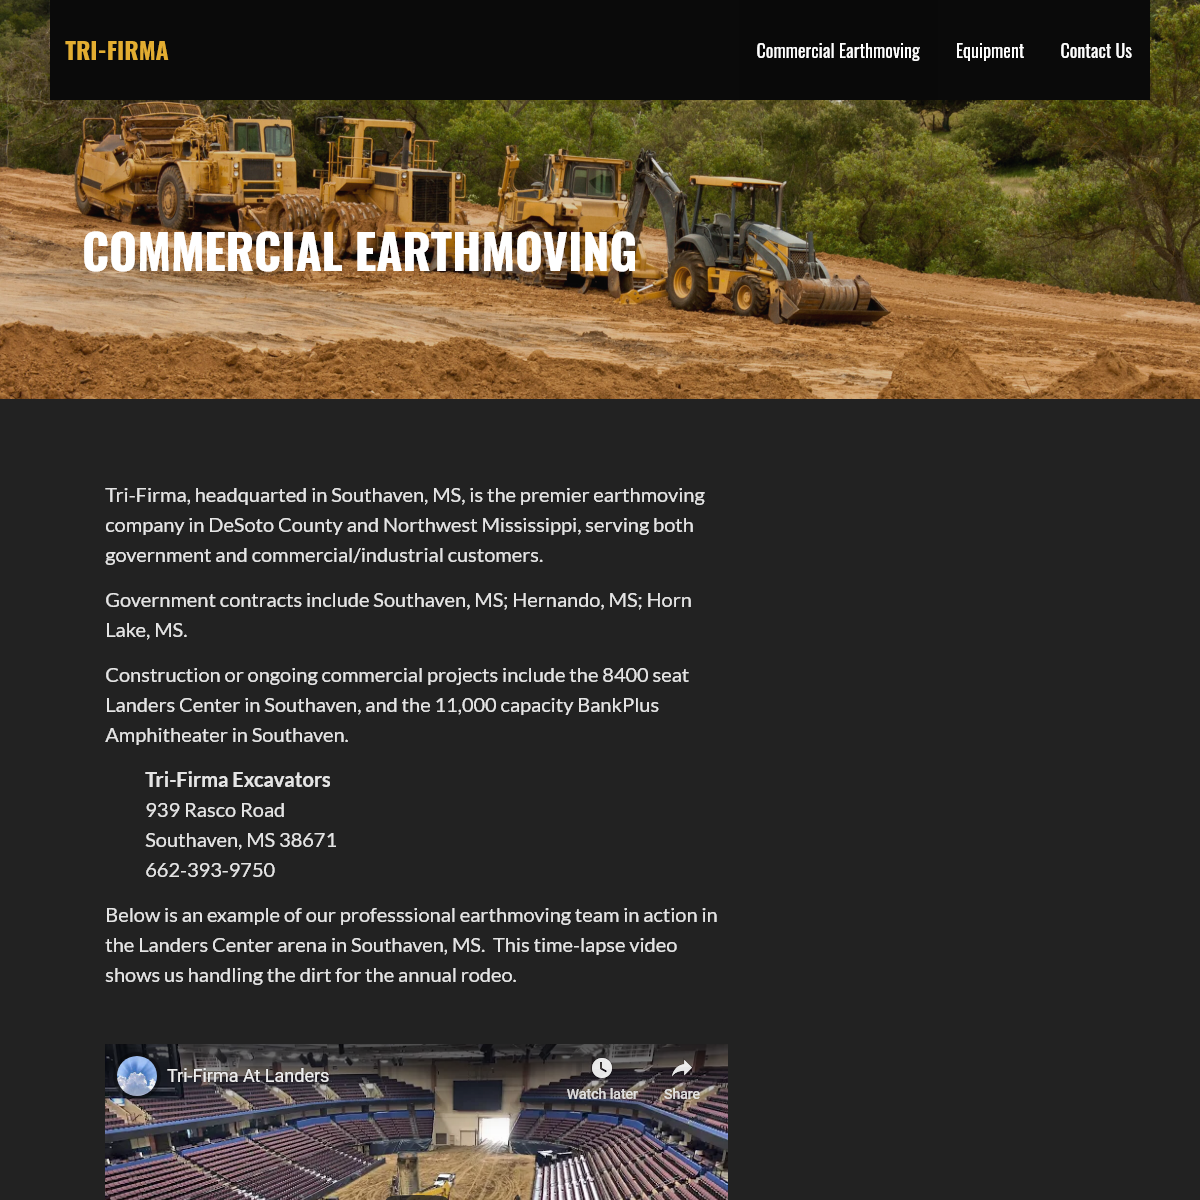 Tri-Firma â€“ Commercial Earthmoving